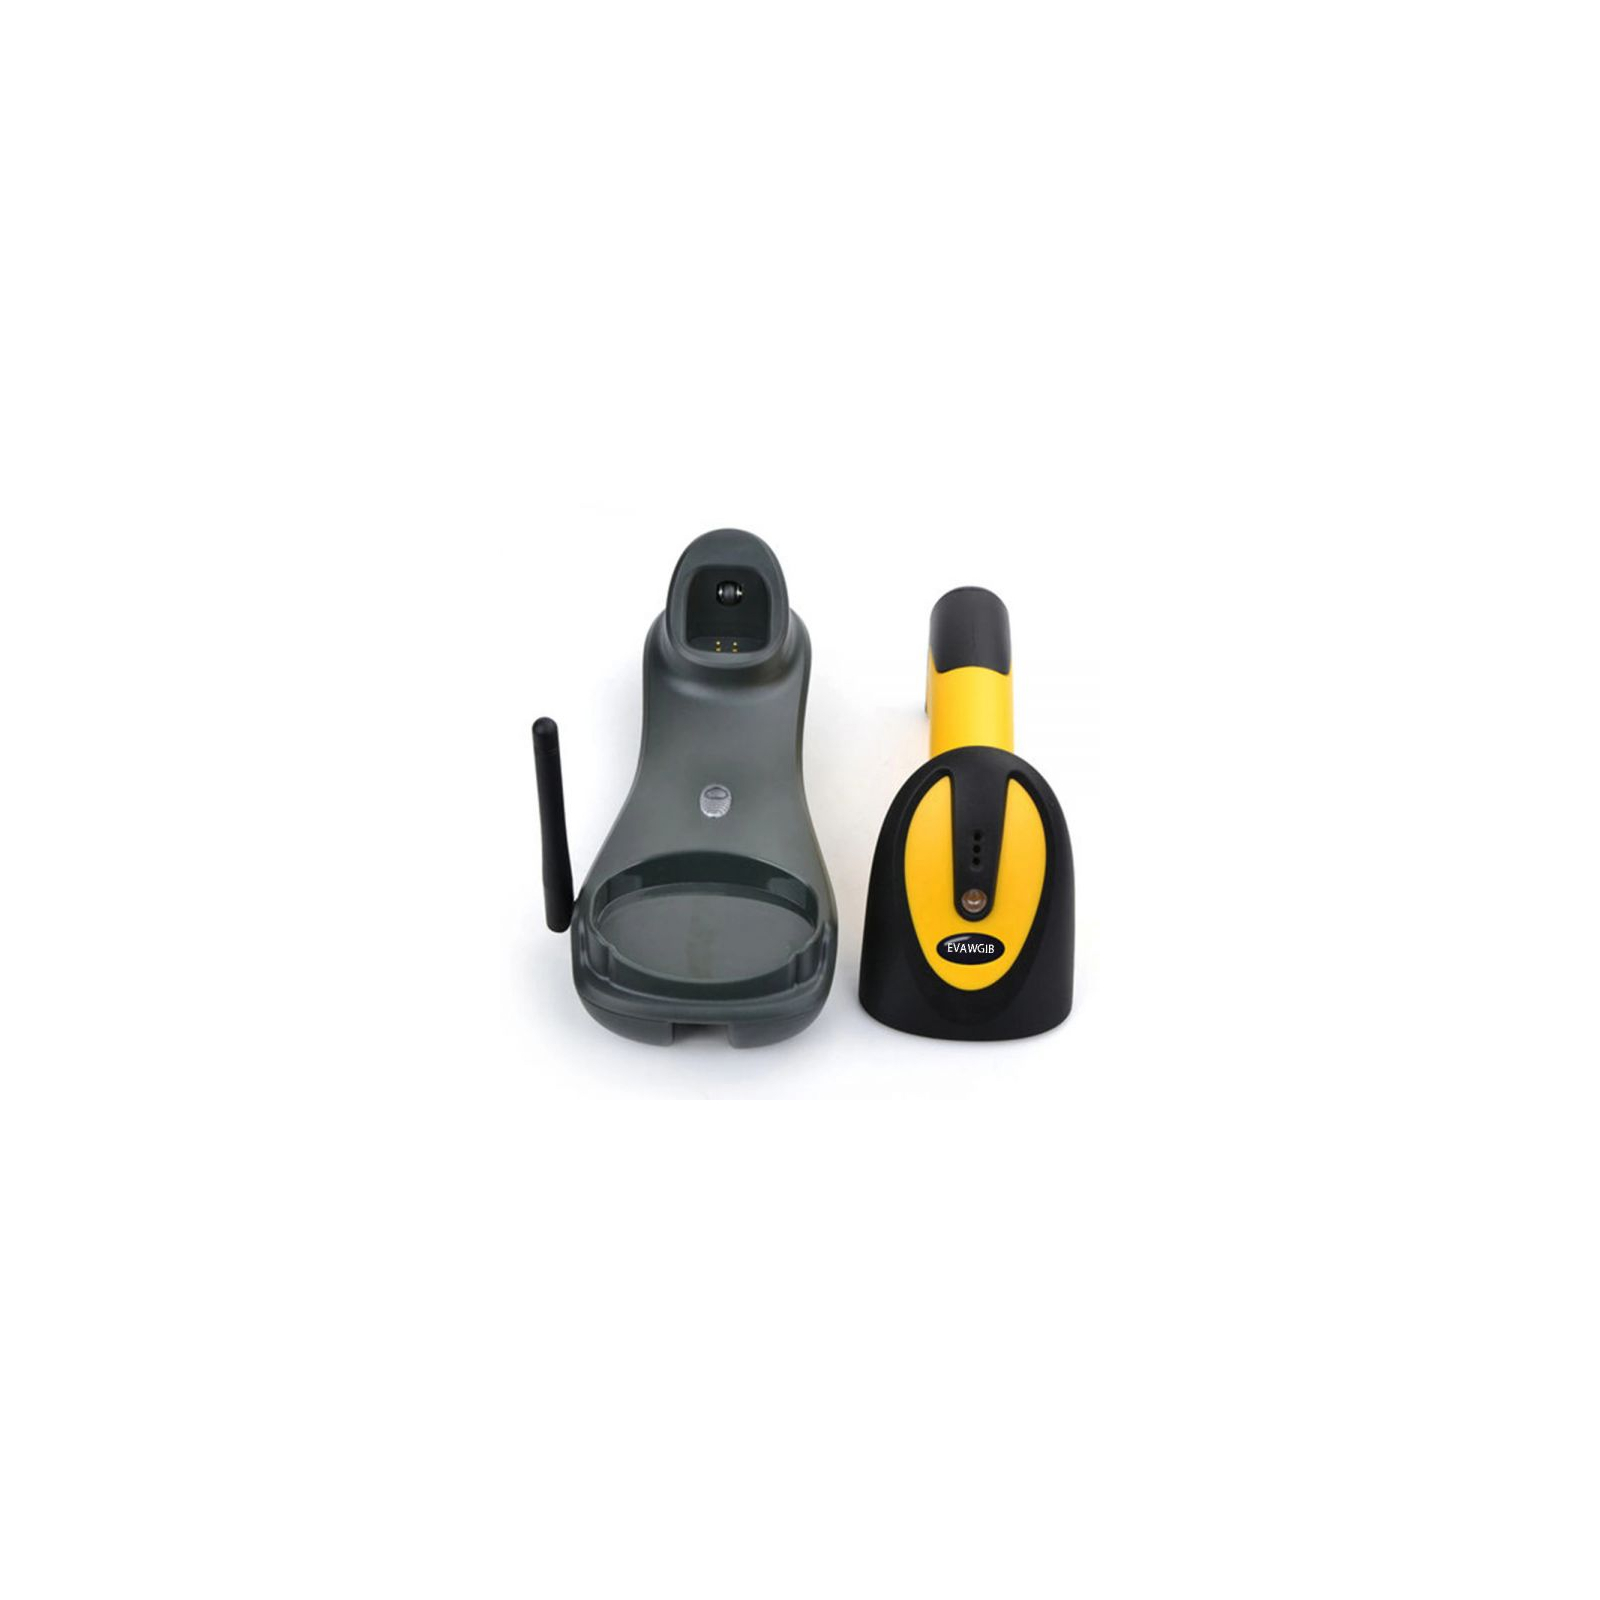 Сканер штрих-кода UKRMARK EV-W2503 2D, 433MHz, USB, IP64, stand, black/yellow (900769) изображение 3